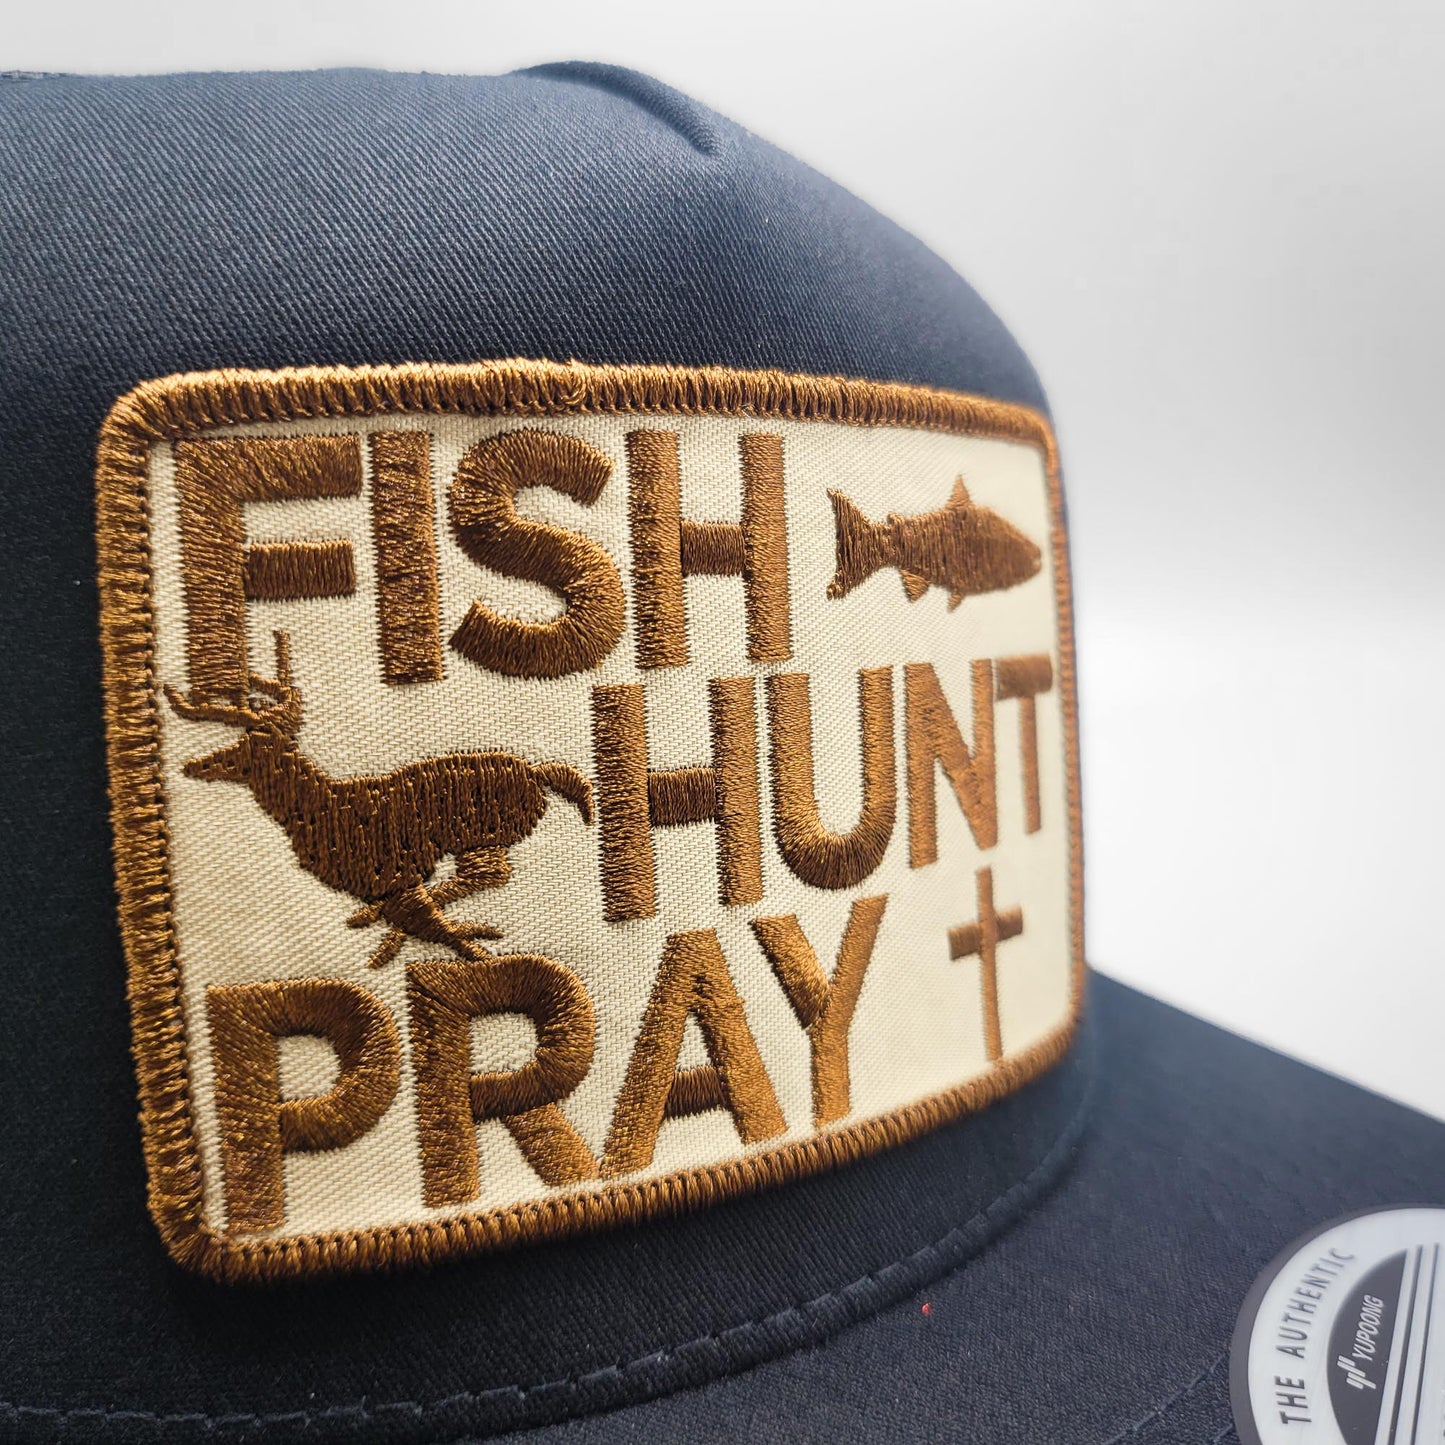 Fish Hunt Pray Trucker Hat, Brown Christian Fishing Hunting Patch, Yupoong 6006 Snapback